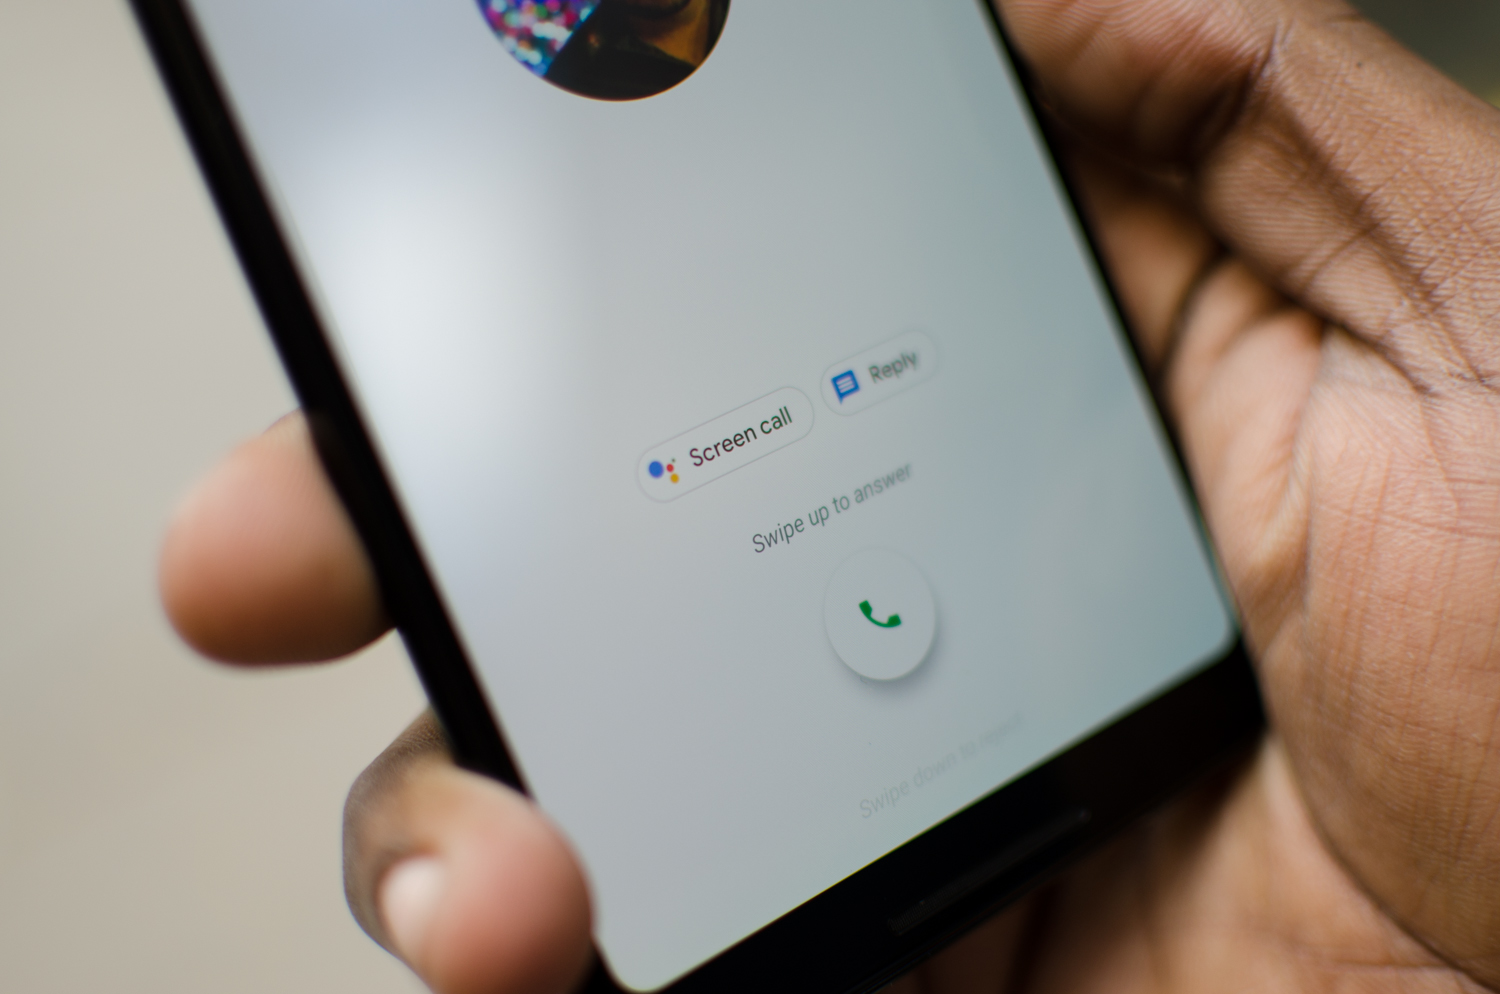 Телефон недоступен. Google Phone with 2 Screen. 666 Number Phone incoming Call. Гугл пиксель 6 тёмный экоан когда звонят.